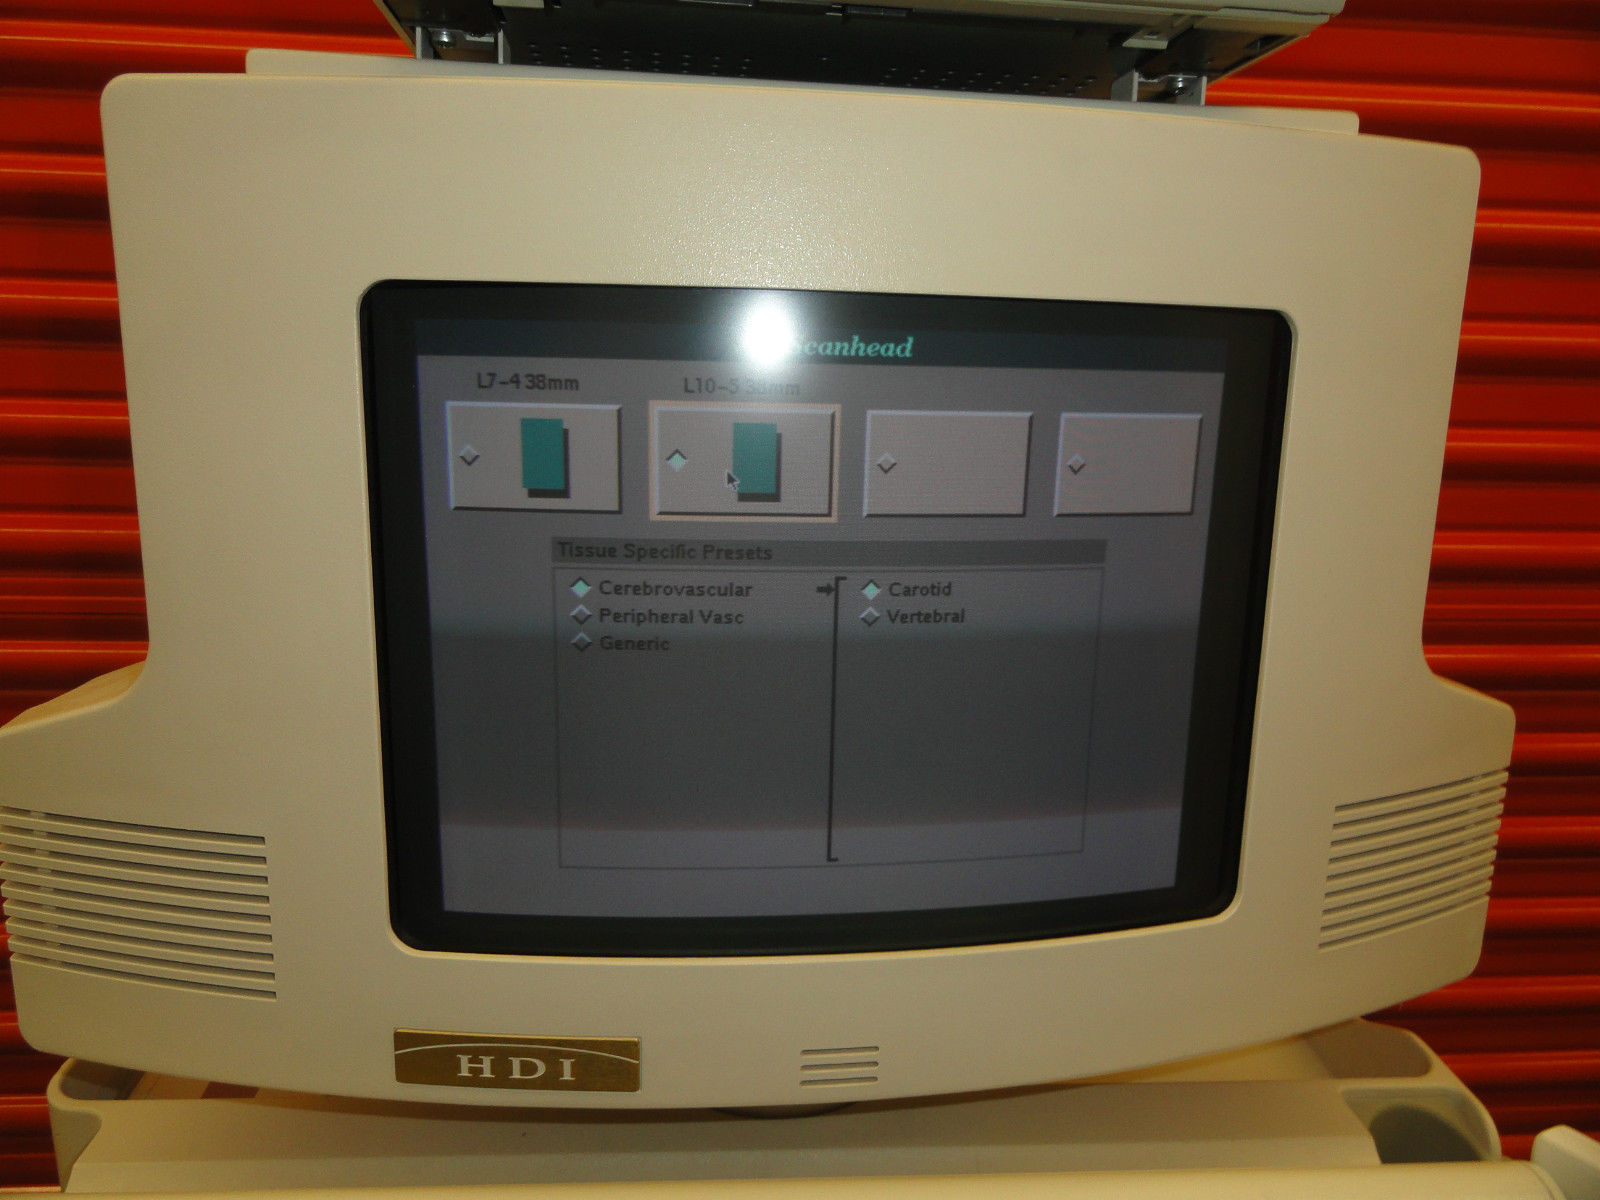 ATL HDI-3000 ULTRASOUND W/ L7-4 & L10-5 VASCUALR-SMALL PARTS PROBES PRINTER &VCR DIAGNOSTIC ULTRASOUND MACHINES FOR SALE